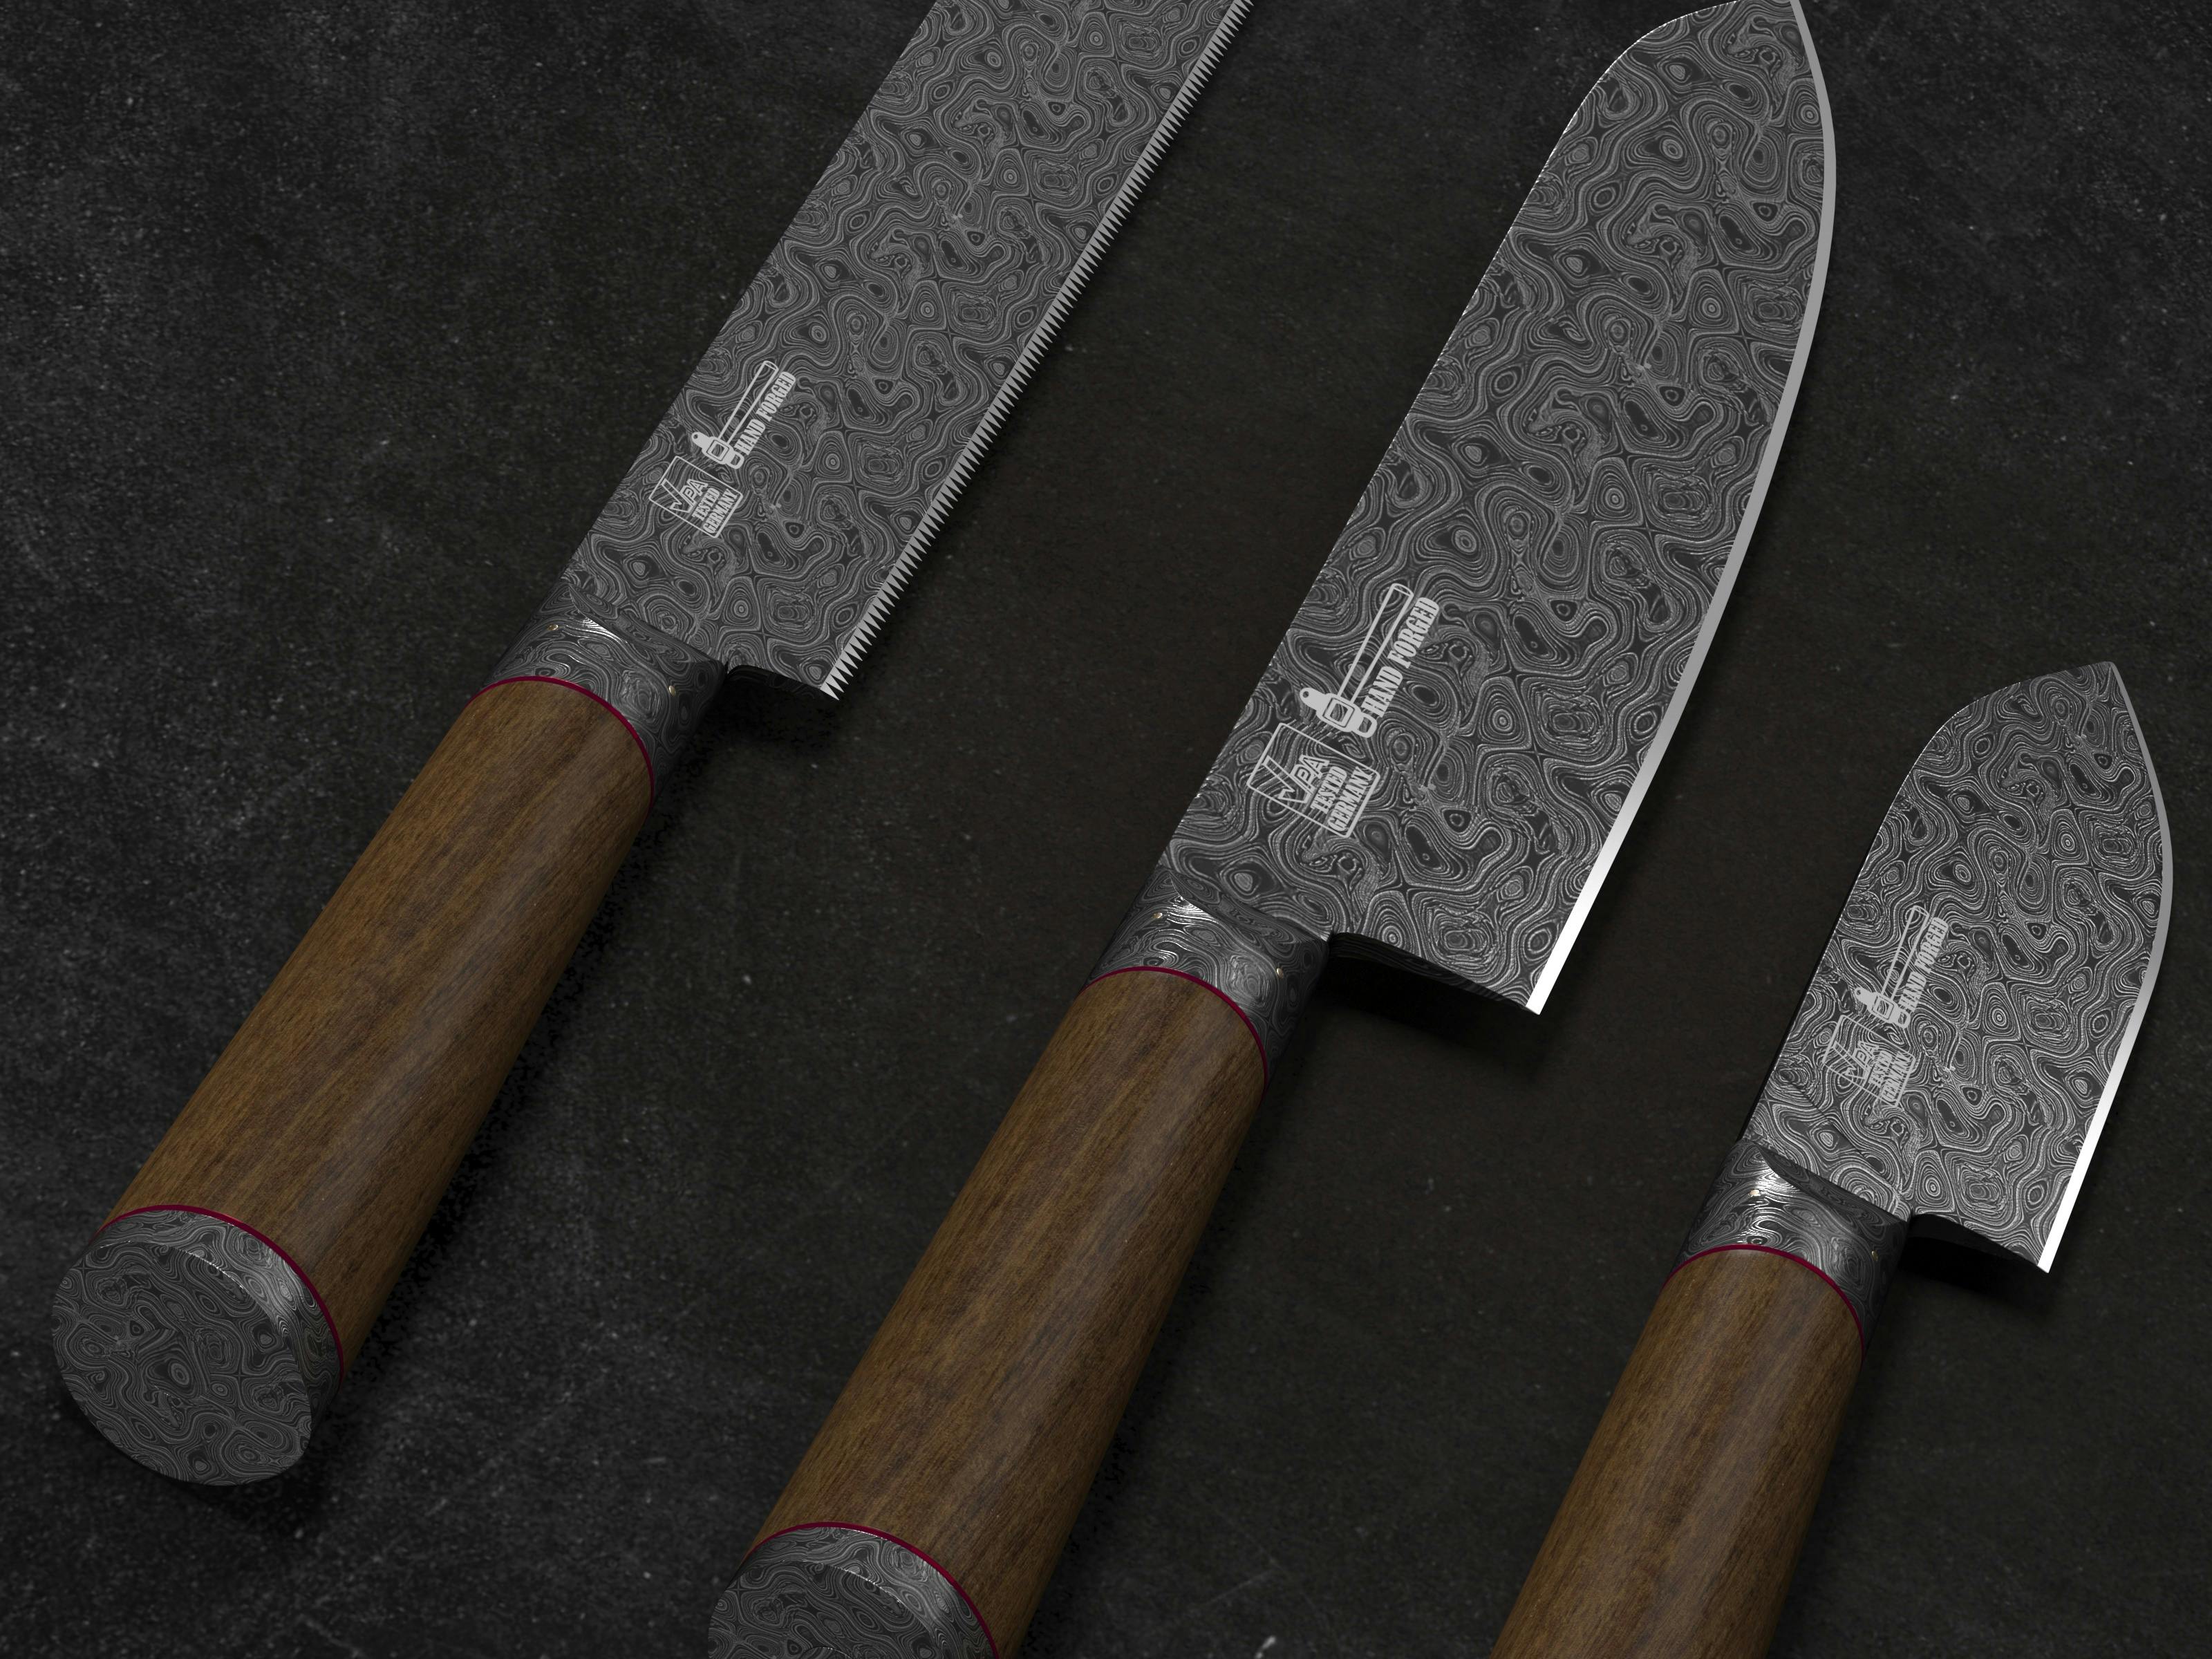 A set of knives | Source: Pexels